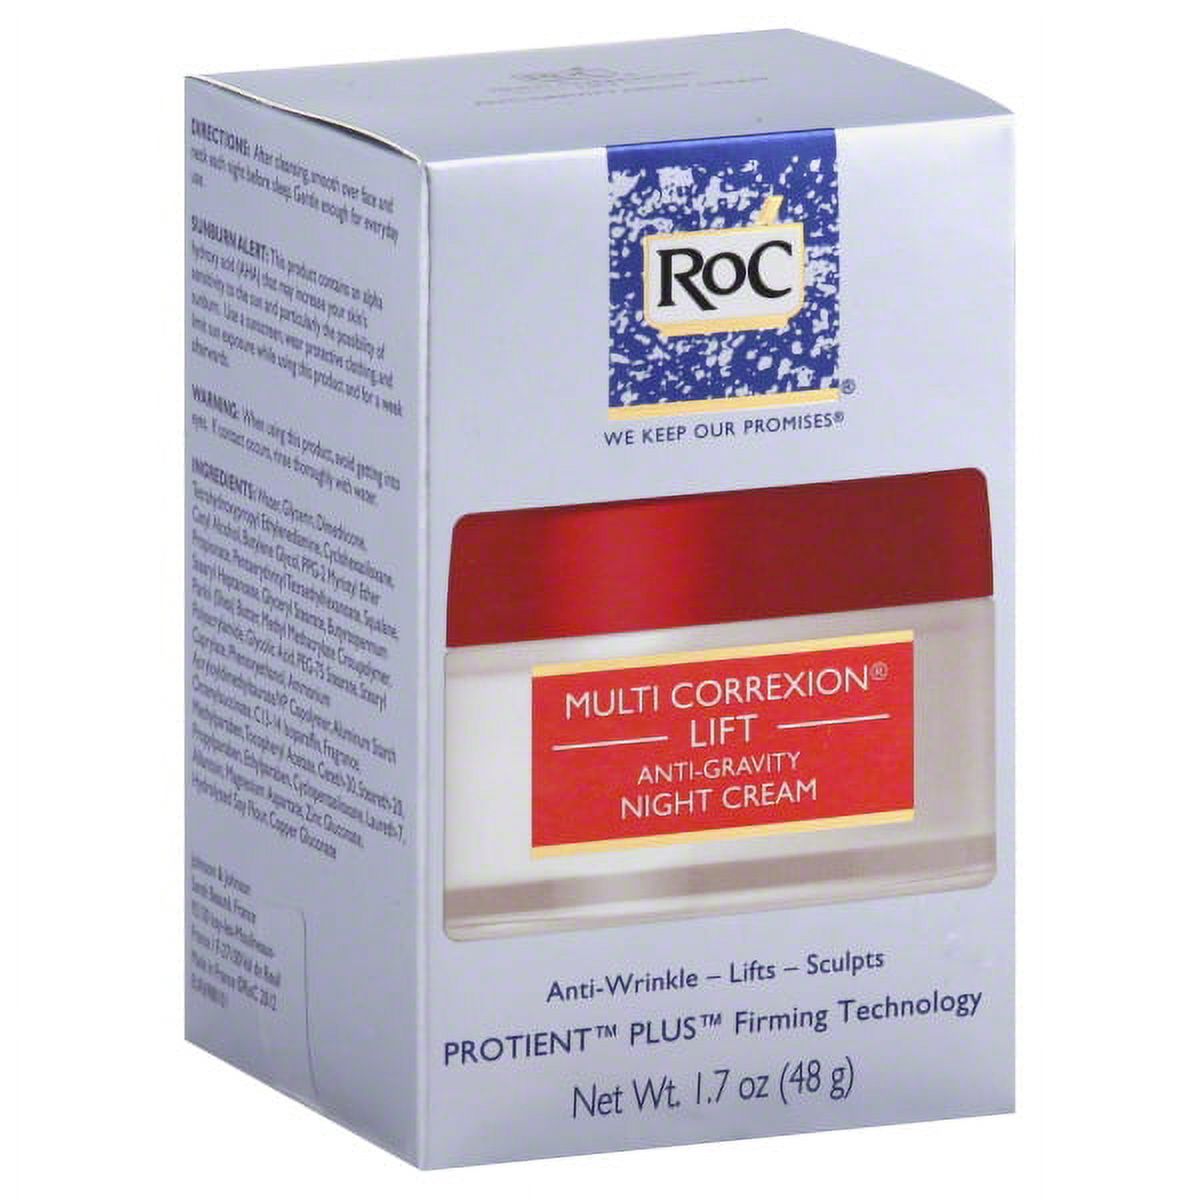 RoC Multi Correxion Lift Night Cream, 1.7 oz - image 1 of 3